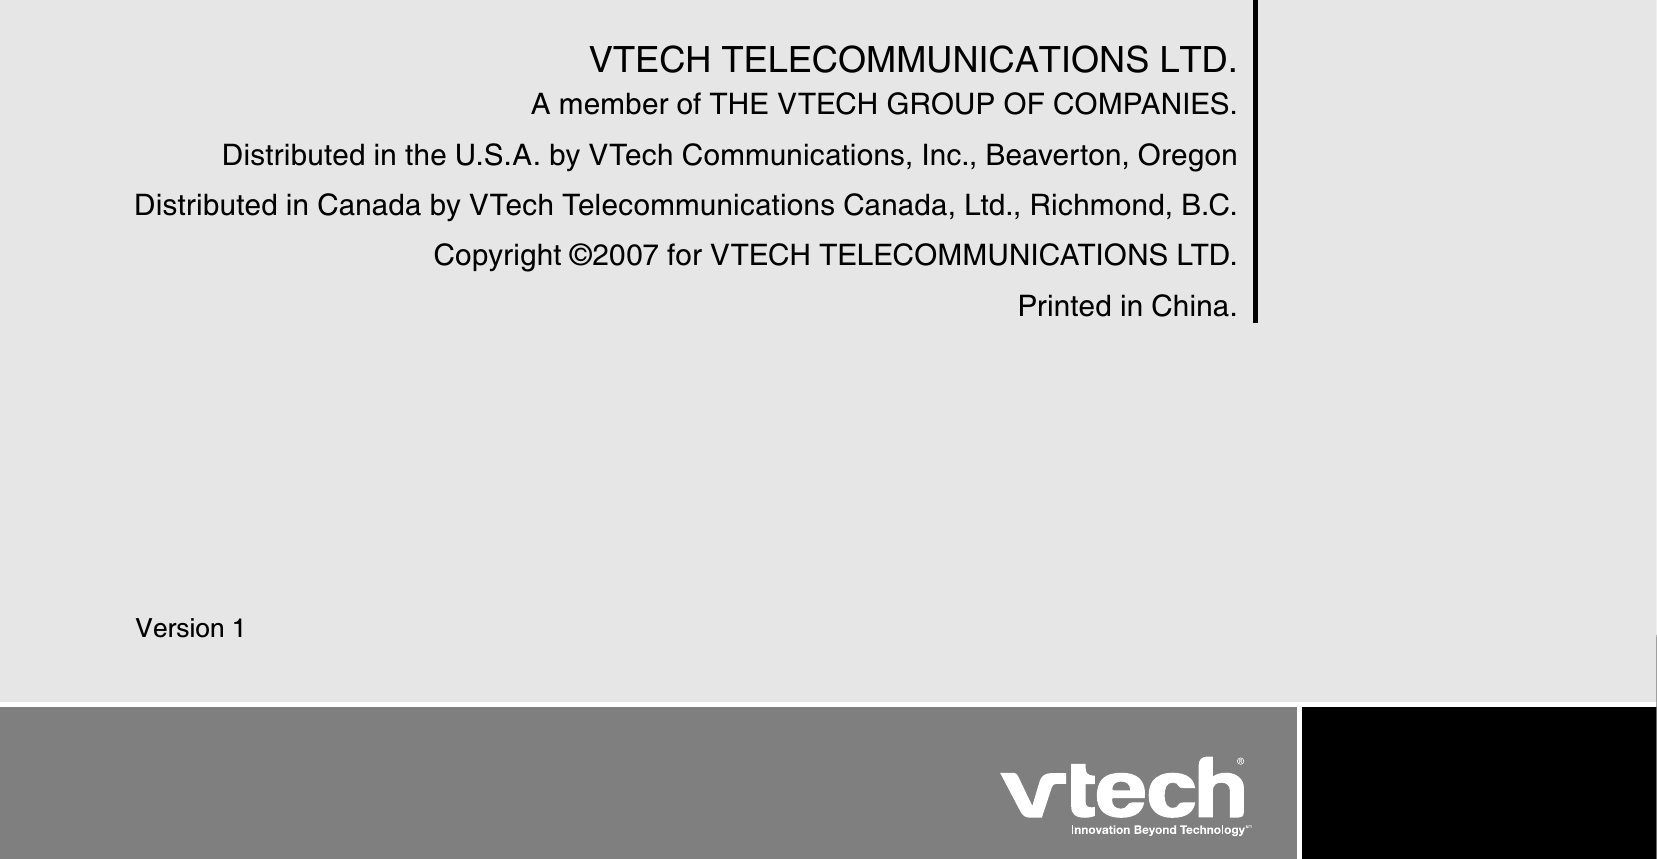 InfoVTECH TELECOMMUNICATIONS LTD.A member of THE VTECH GROUP OF COMPANIES.Distributed in the U.S.A. by VTech Communications, Inc., Beaverton, OregonDistributed in Canada by VTech Telecommunications Canada, Ltd., Richmond, B.C.Copyright © 2007 for VTECH TELECOMMUNICATIONS LTD.Printed in China.Version 1